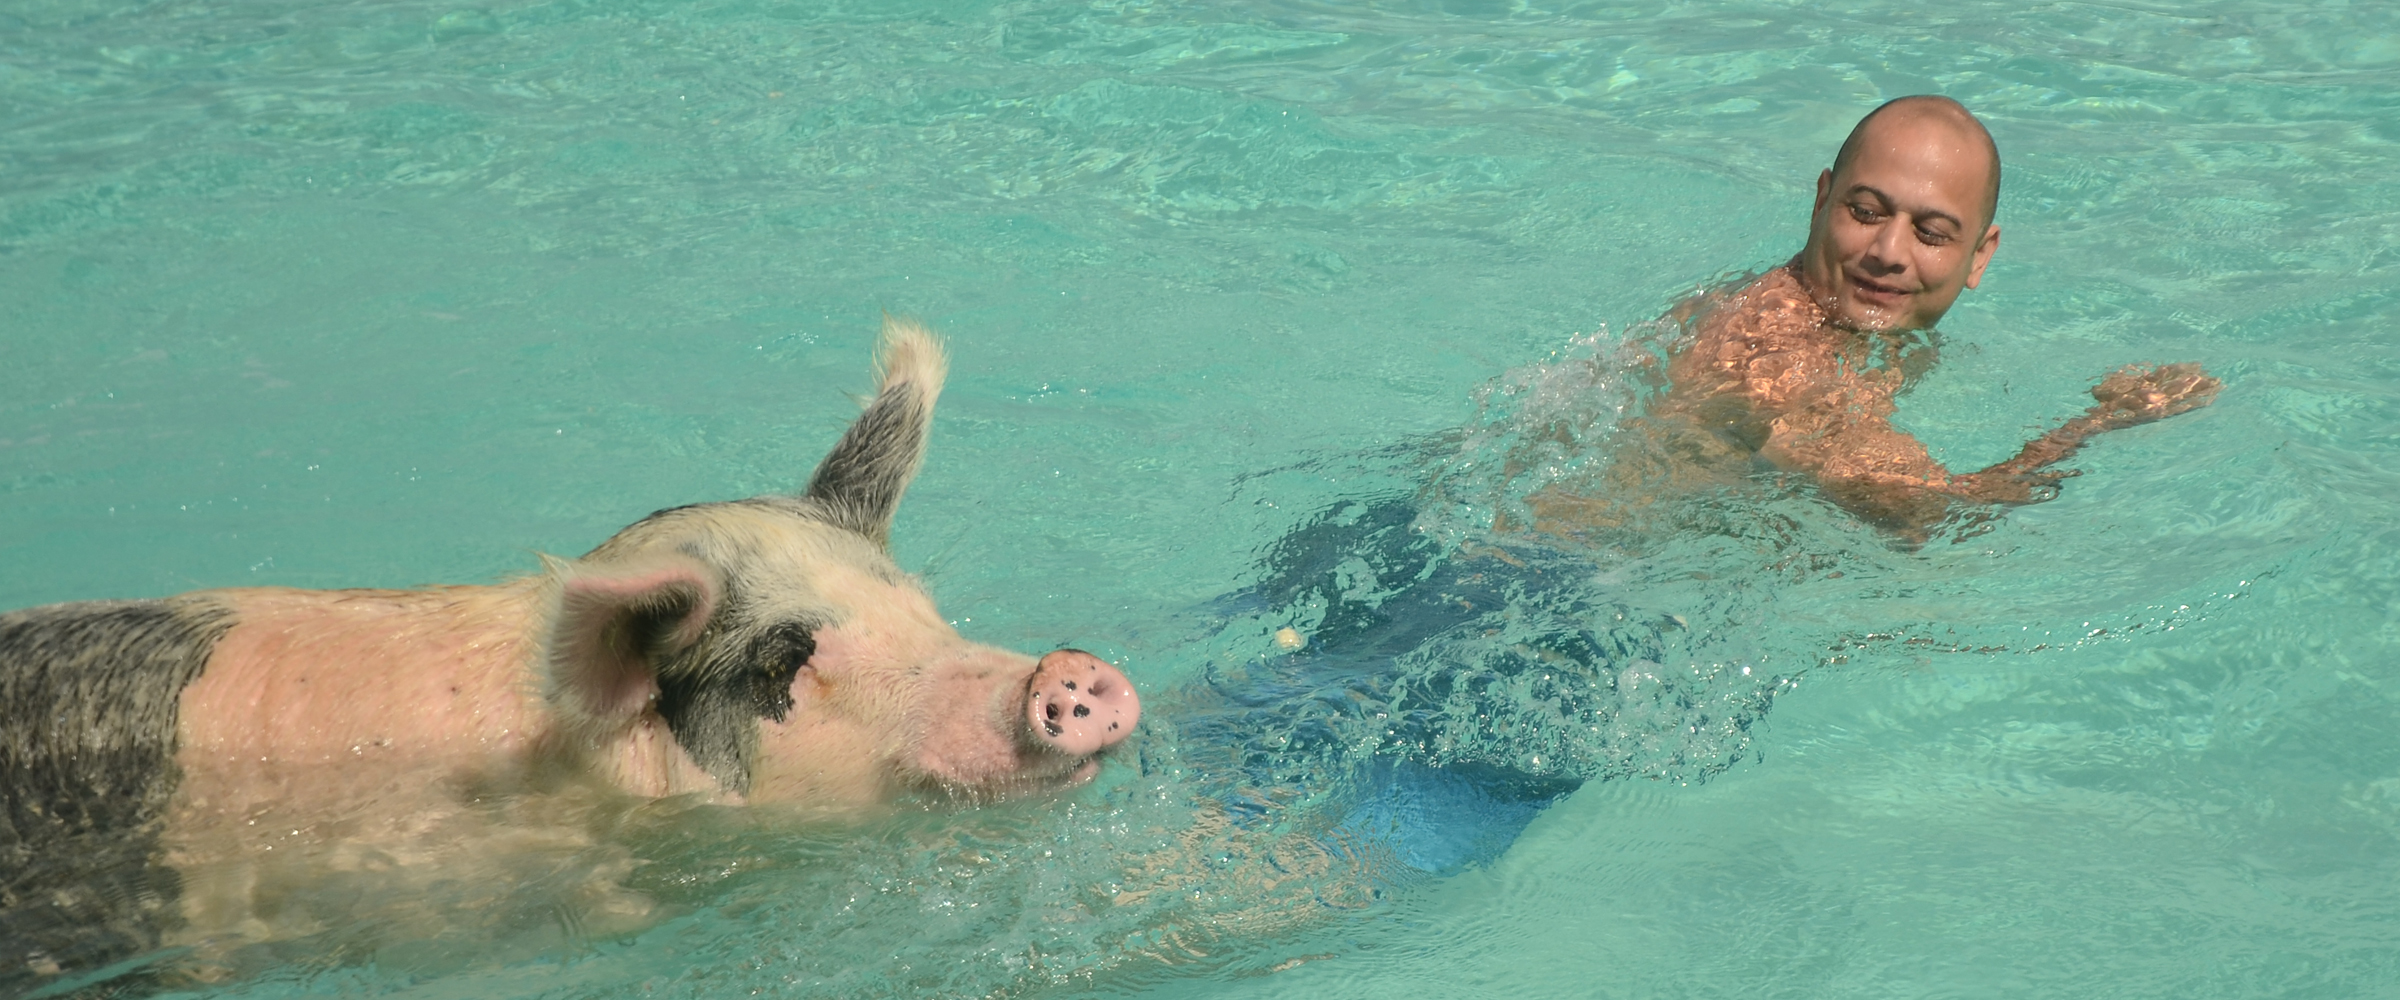 Swimming Pigs Tour in Bahamas